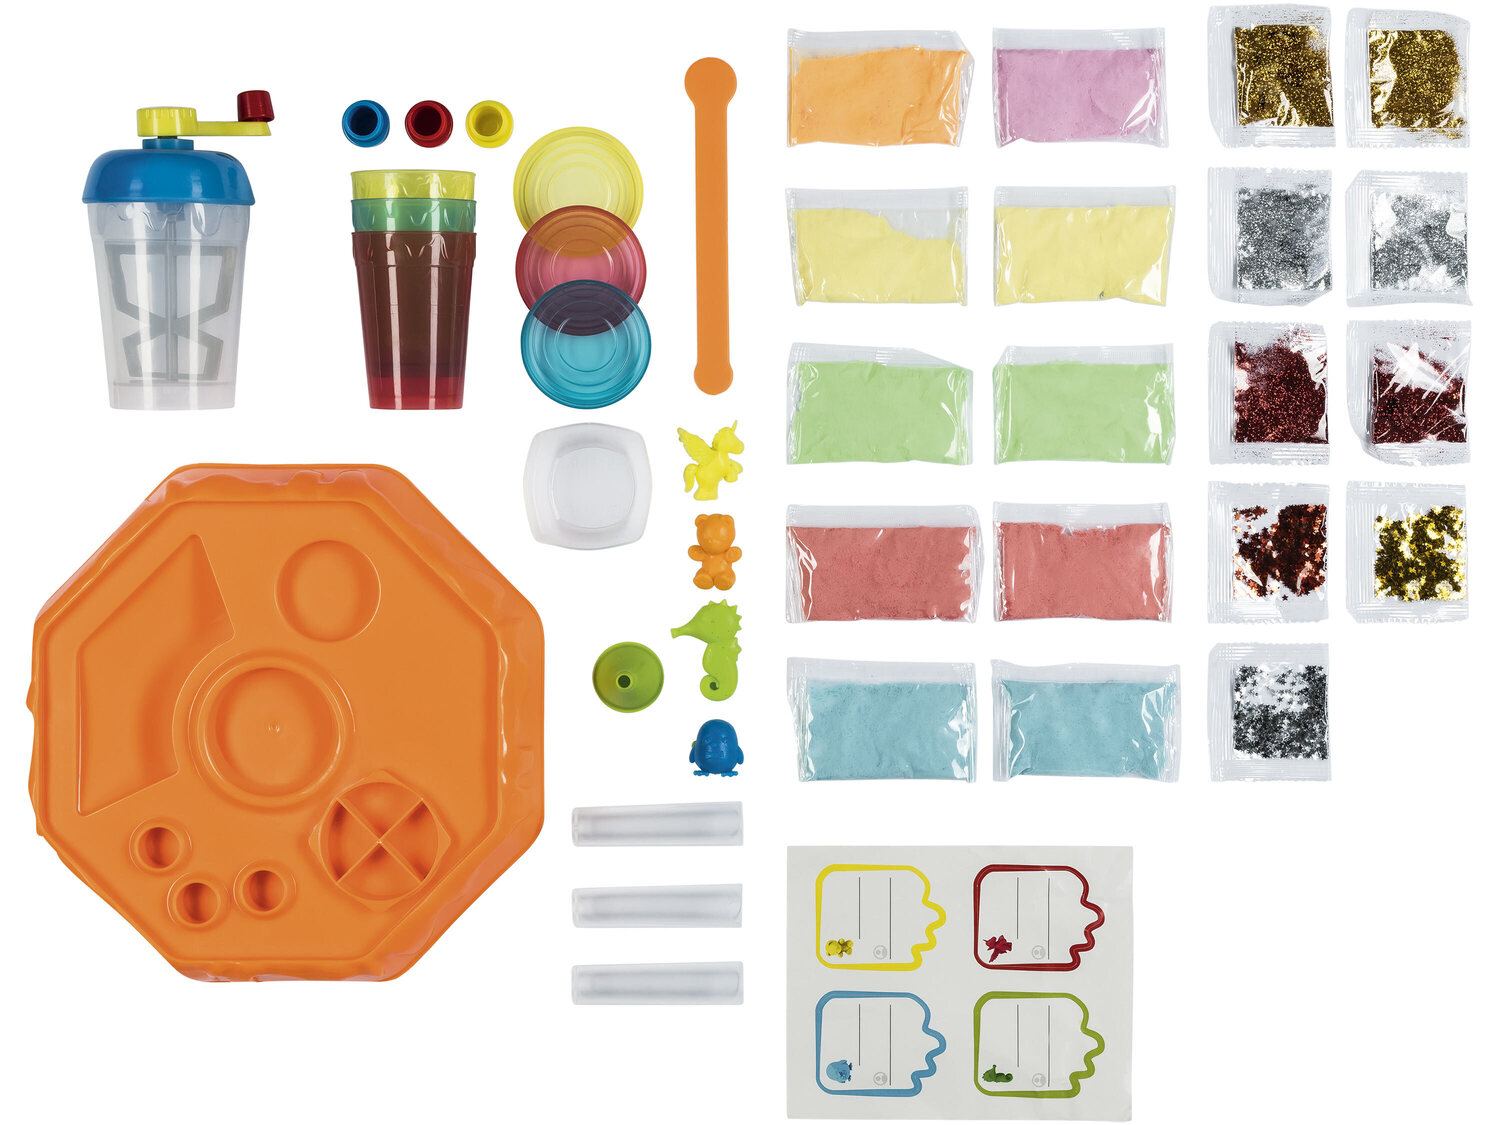 Laboratorium Slime Playtive Junior, cena 49,99 PLN 
- figurki, kolorowy puder z ...